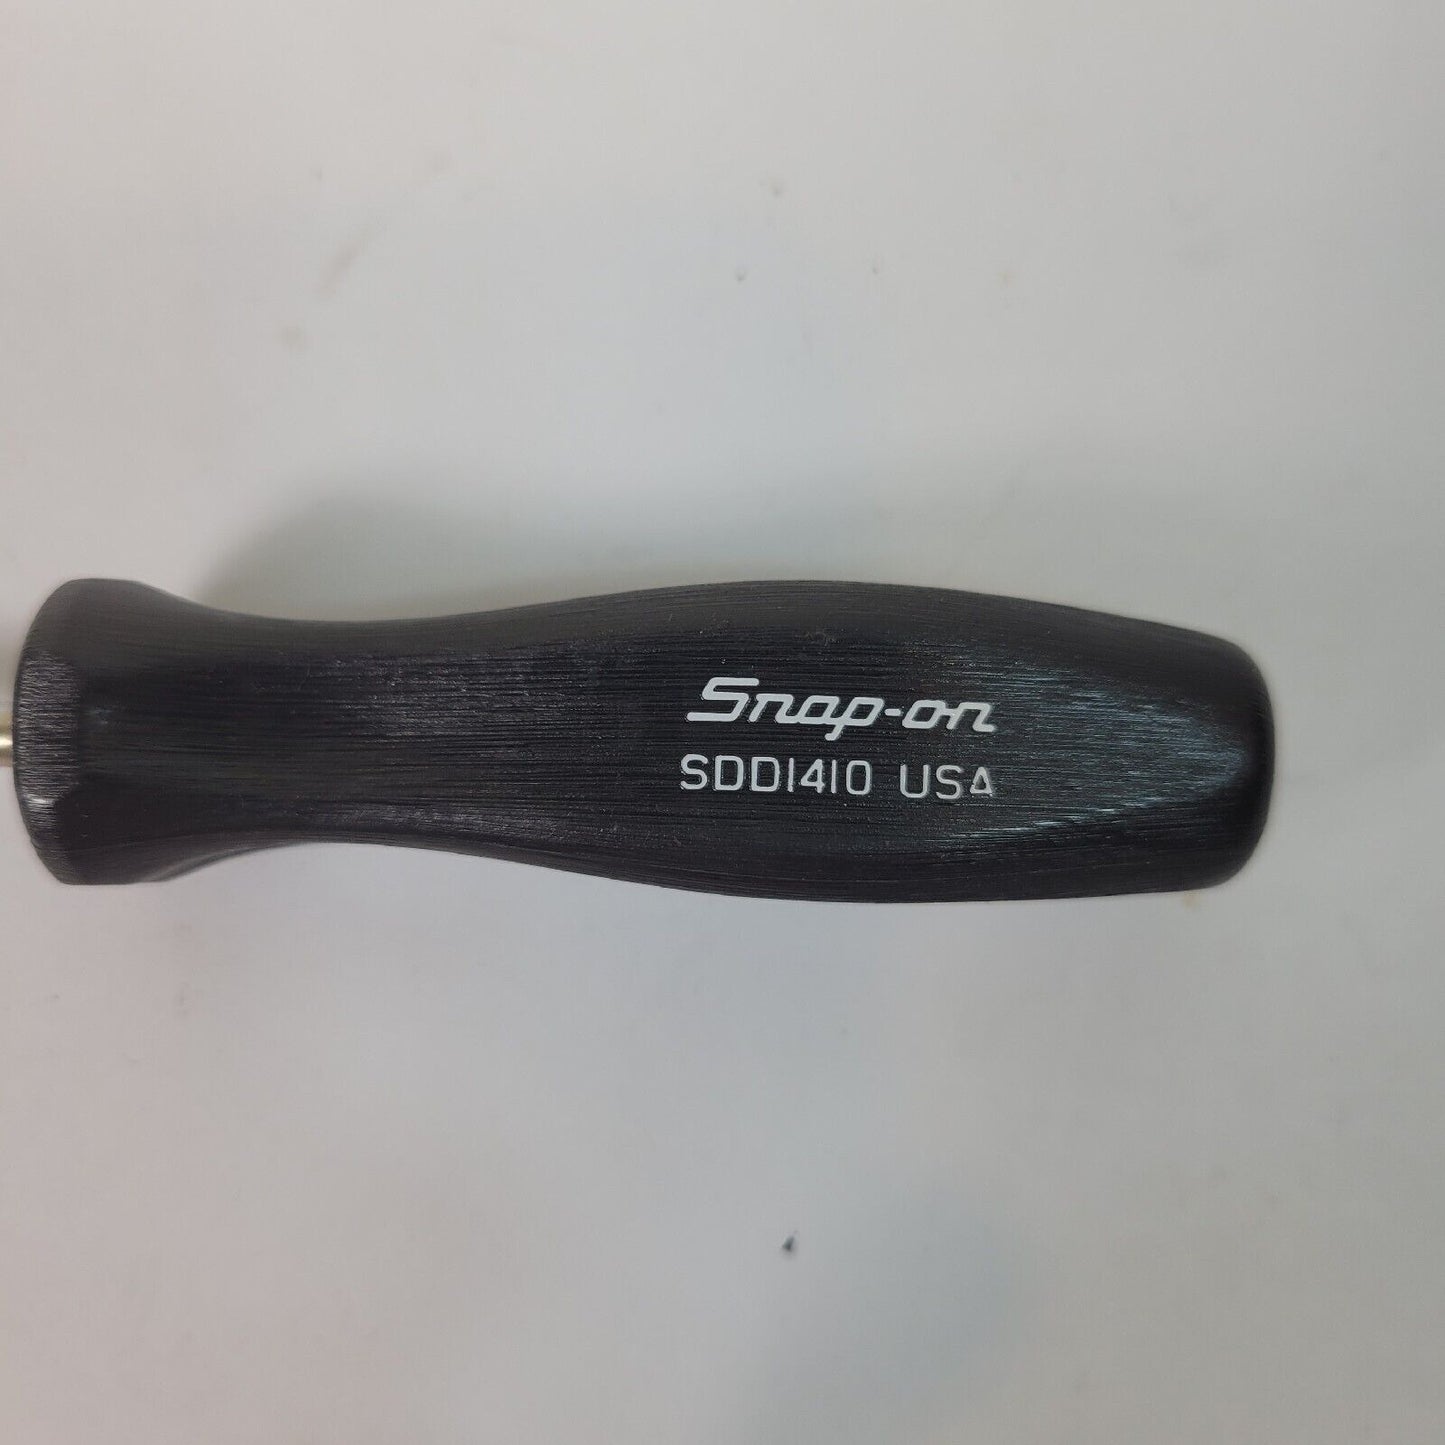 Snap-On SDD1410 13" Black slotted Screwdriver, Black hard handle